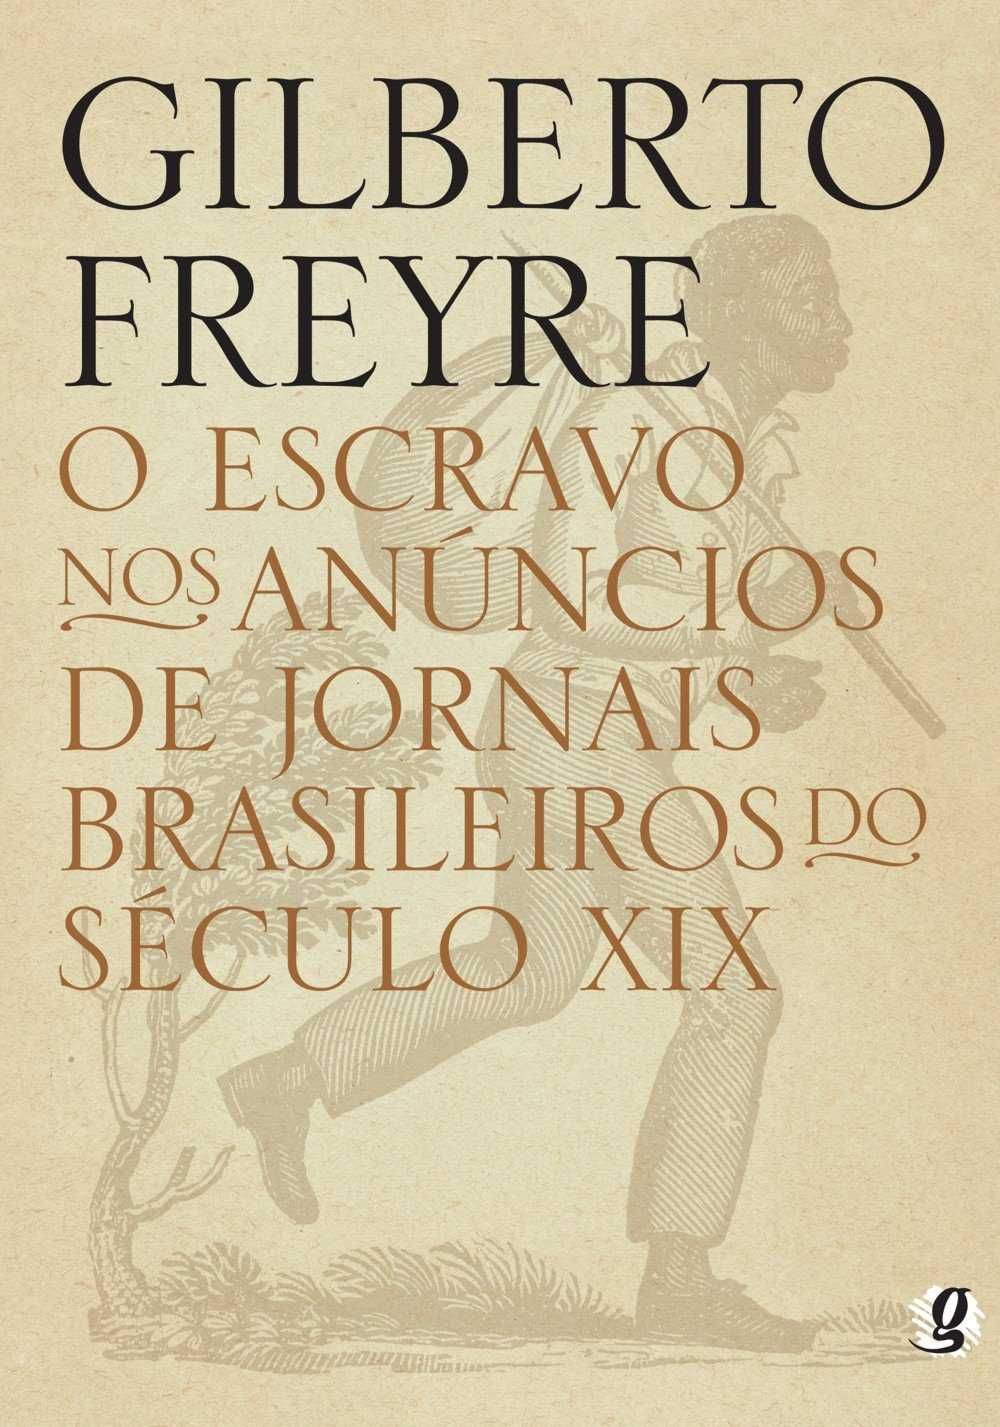 Gilberto Freyre - Pack de livros